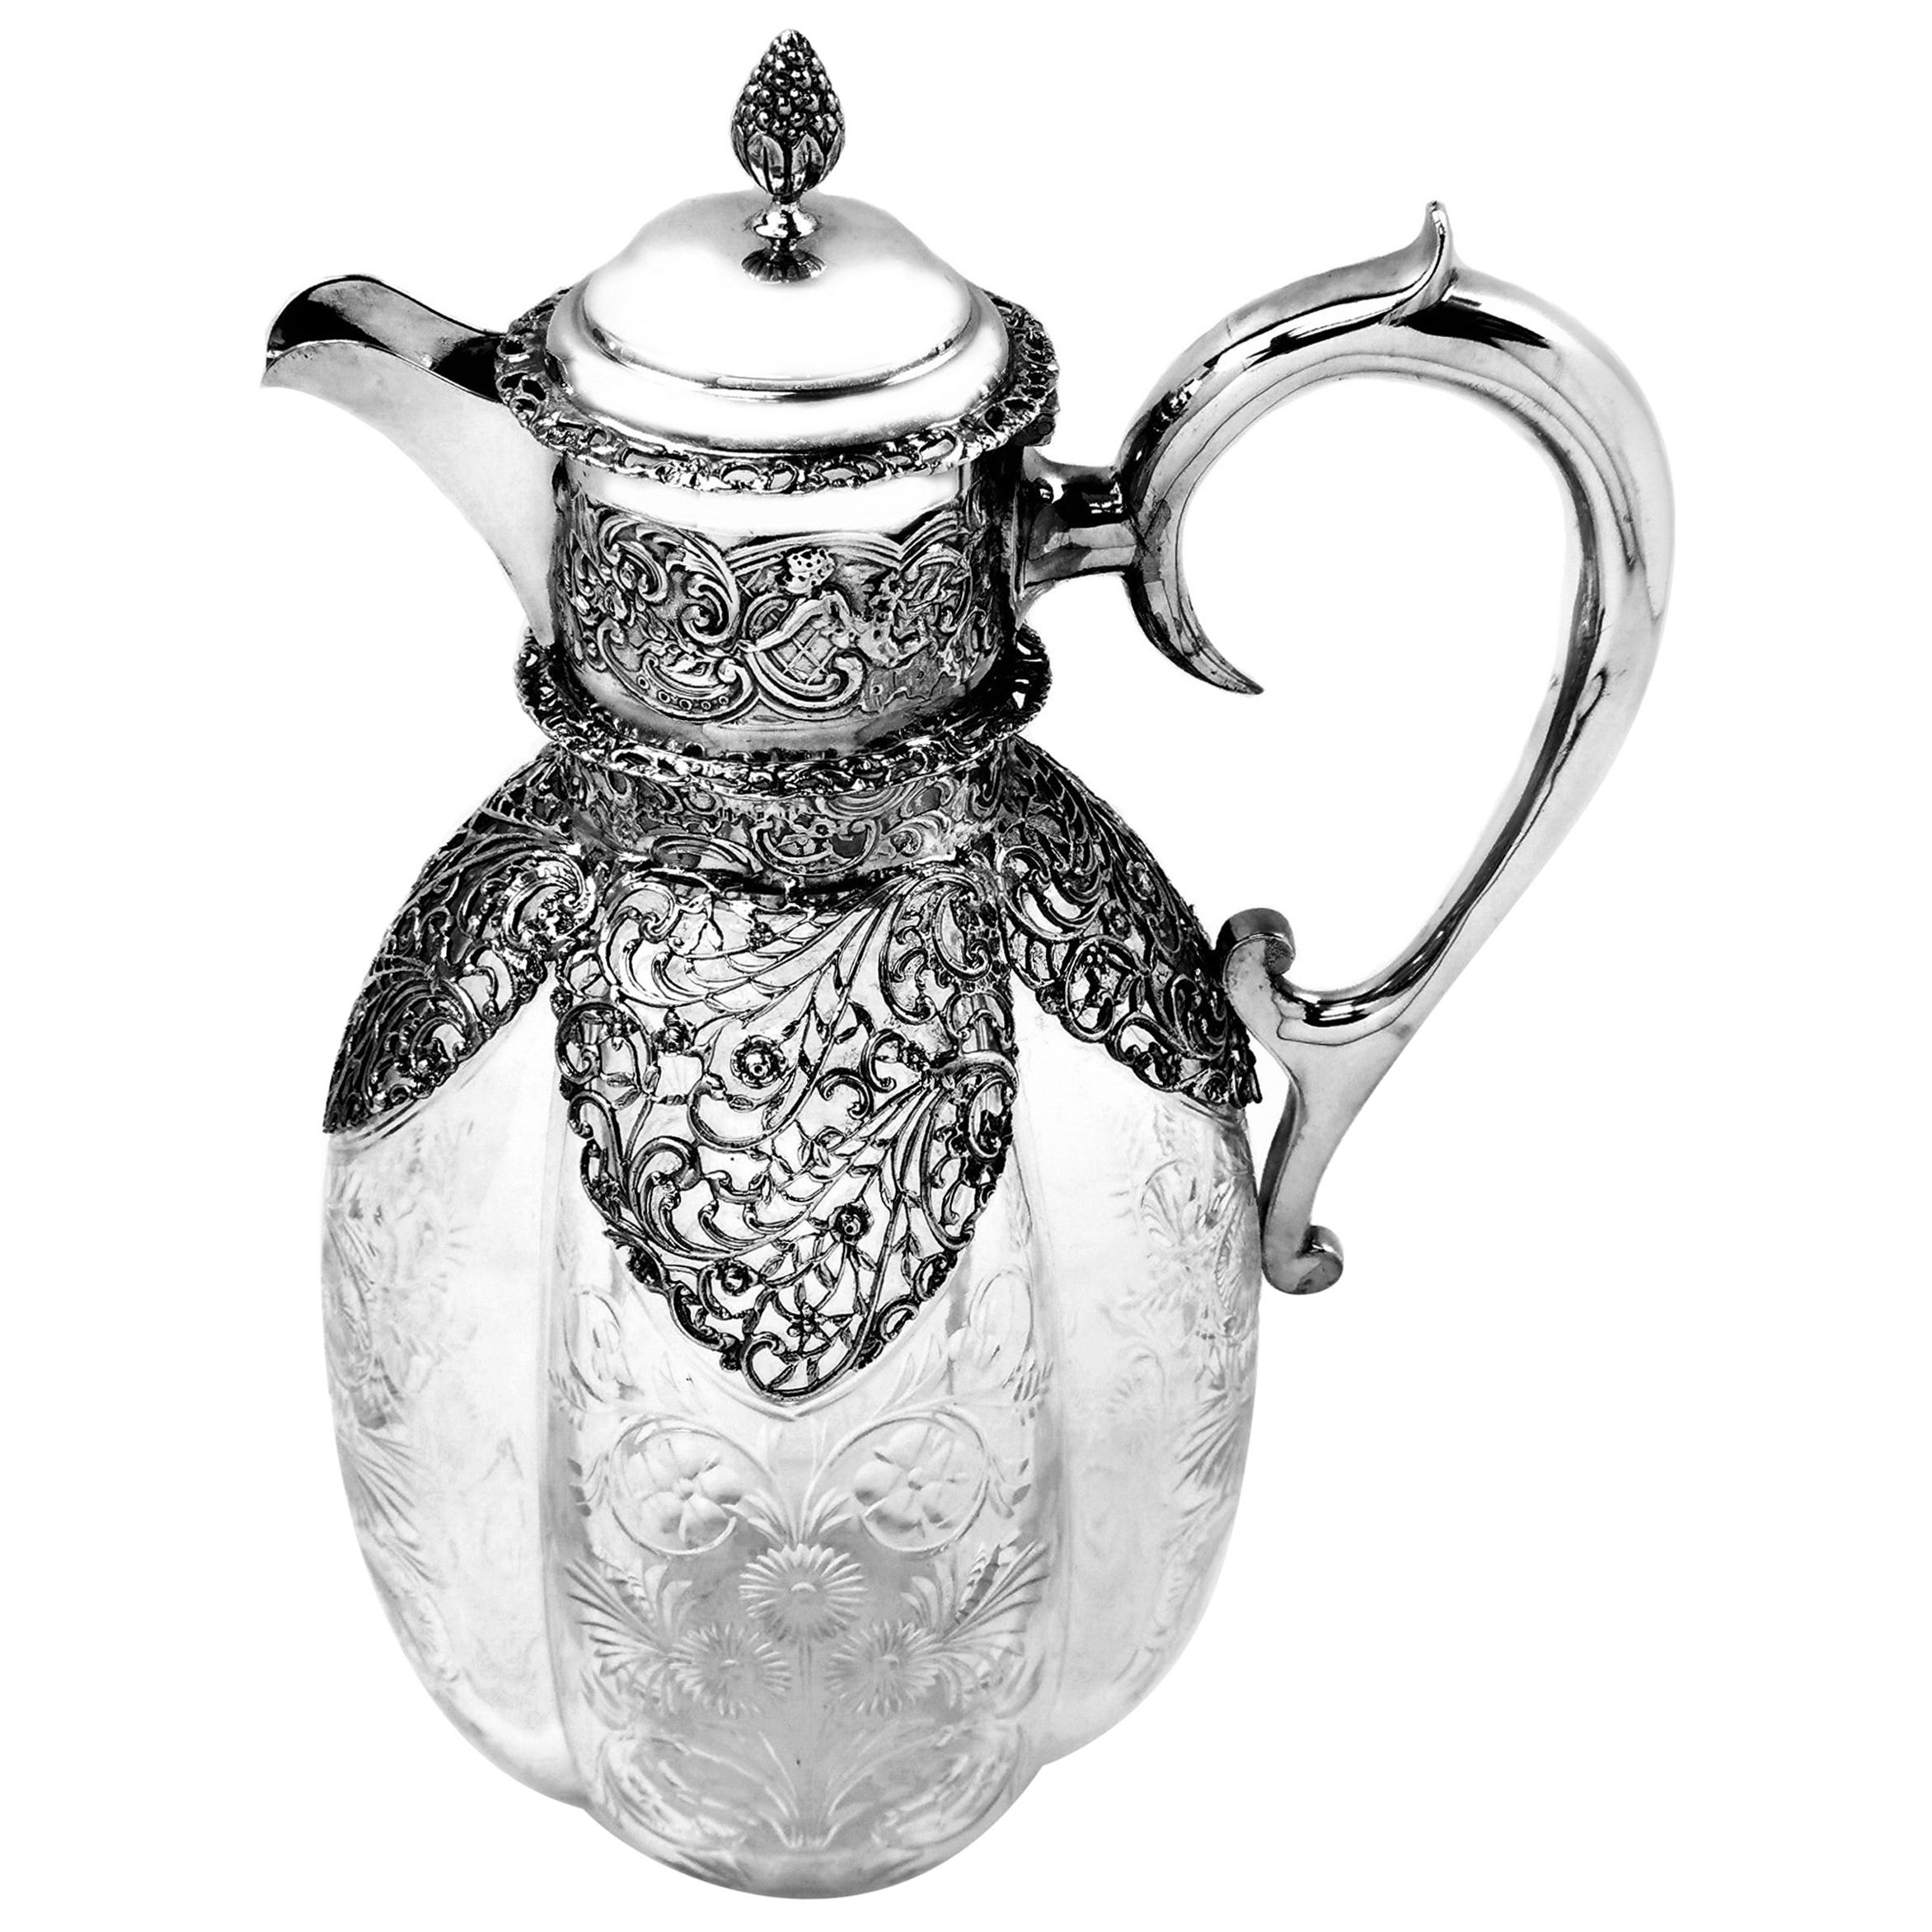 Antique Edwardian Sterling Silver & Cut Glass Claret Jug or Wine Decanter 1904